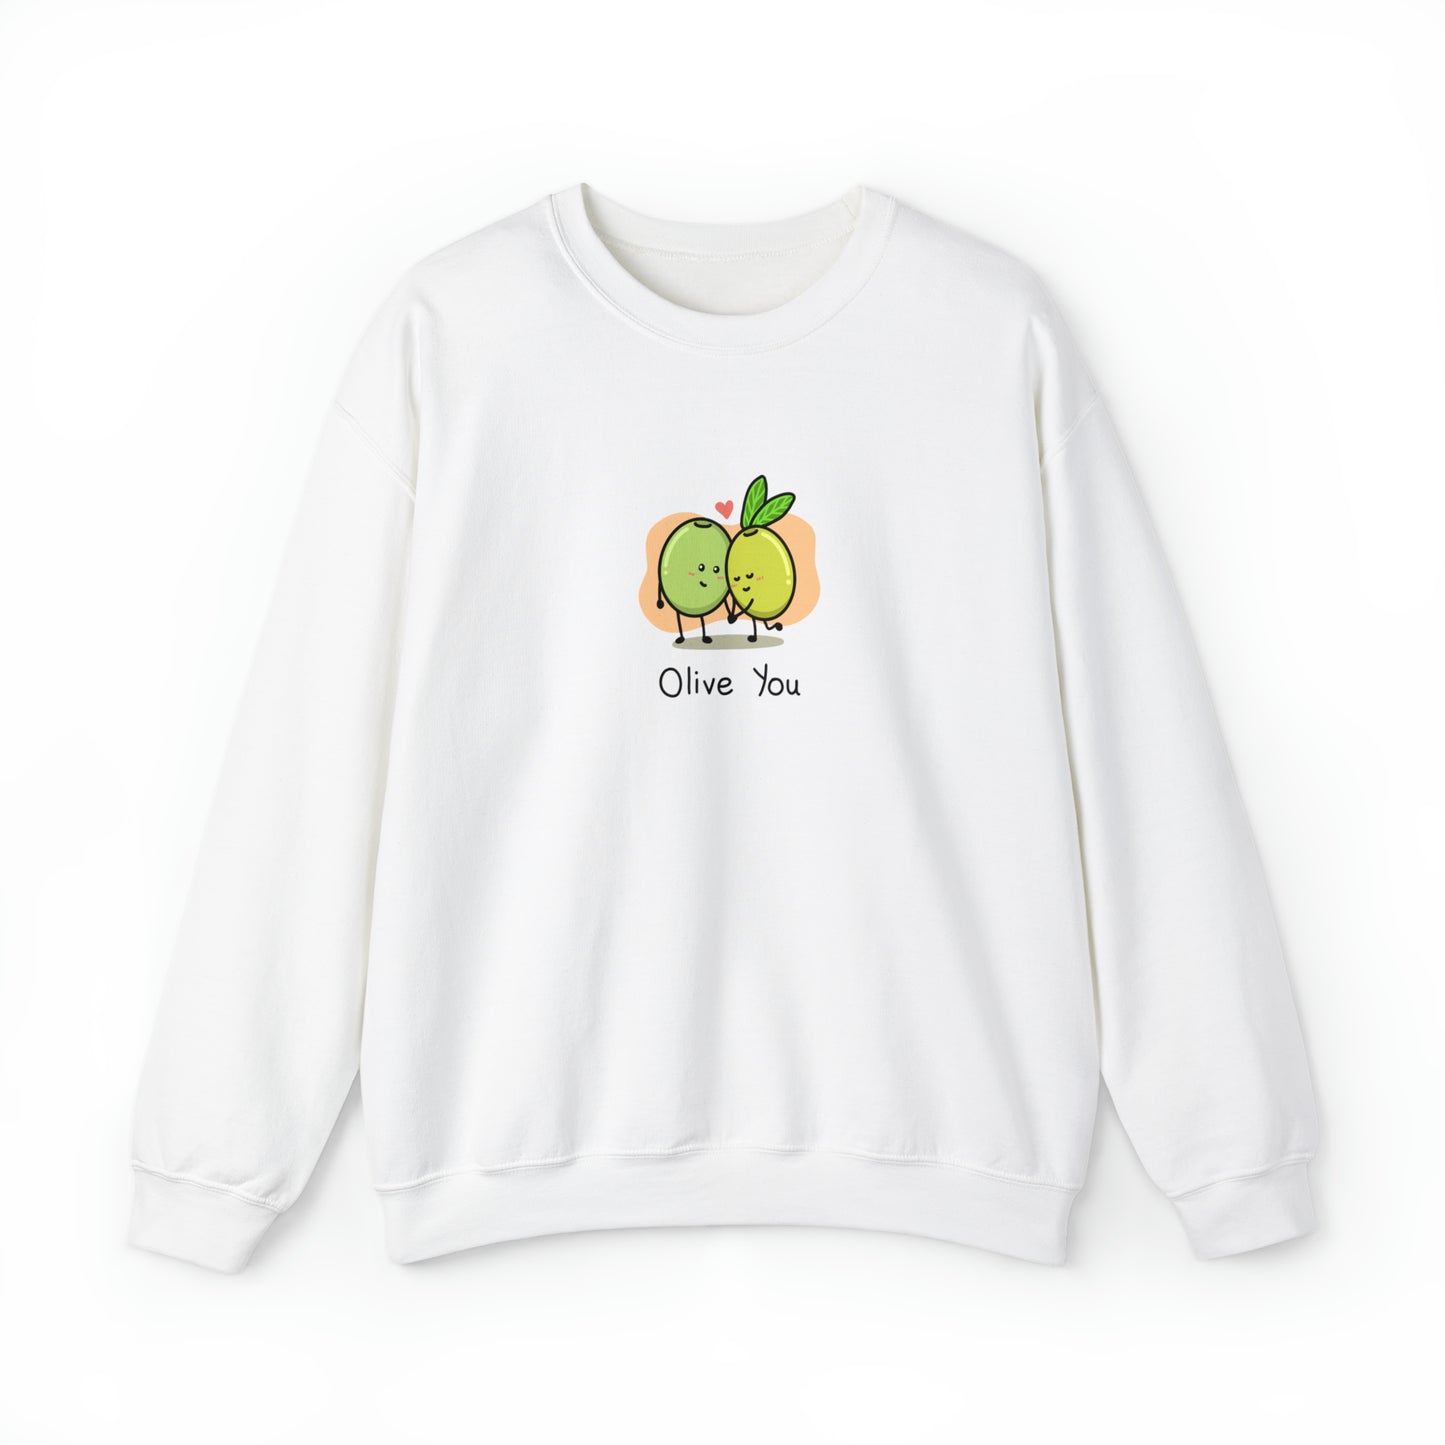 Custom Parody Crewneck Sweatshirt, Olive you Design